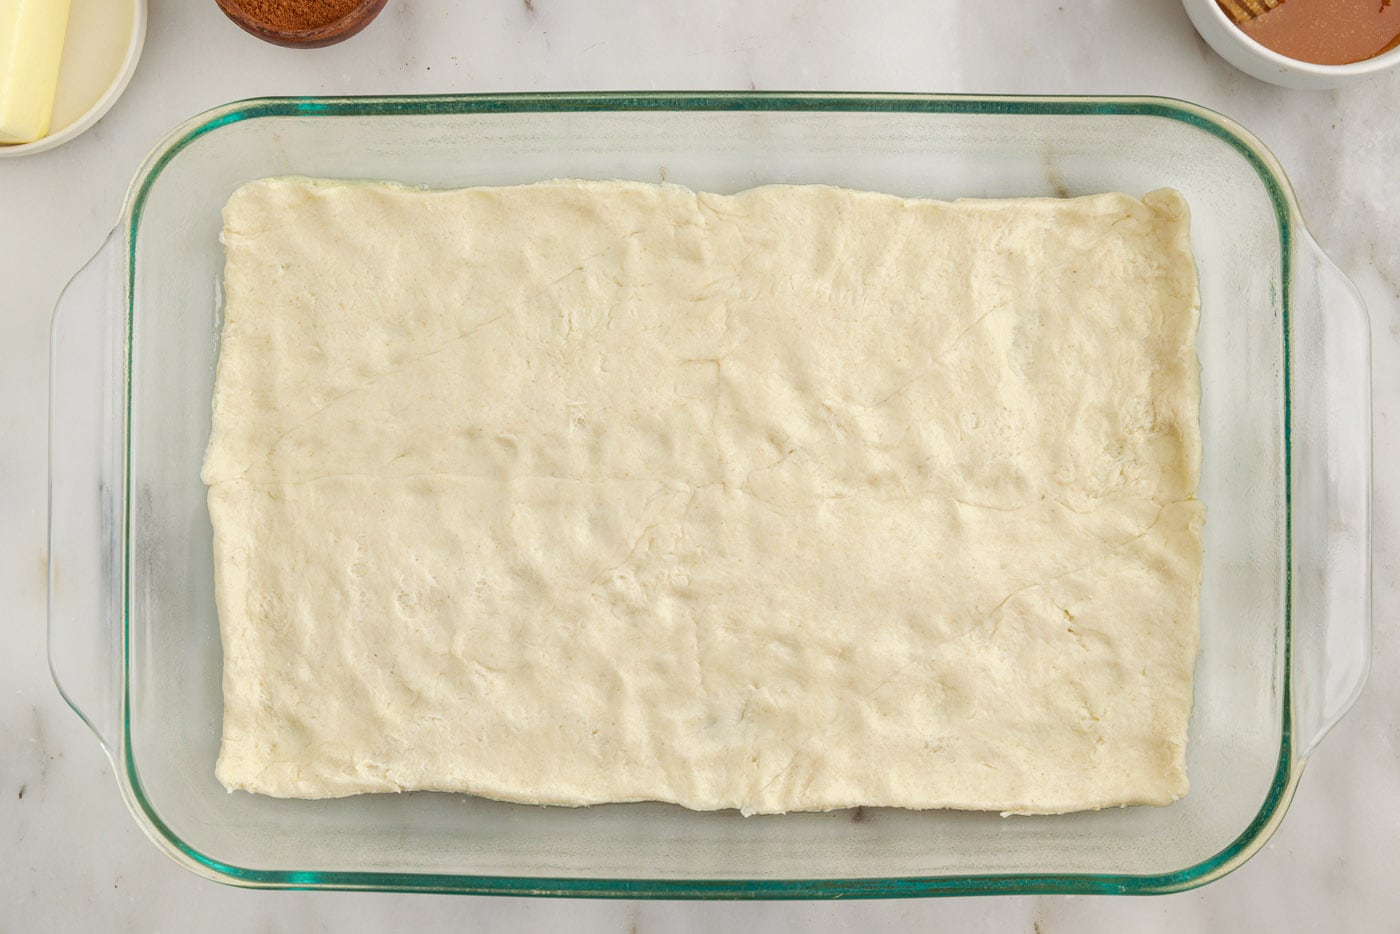 crescent dough in a baking dish